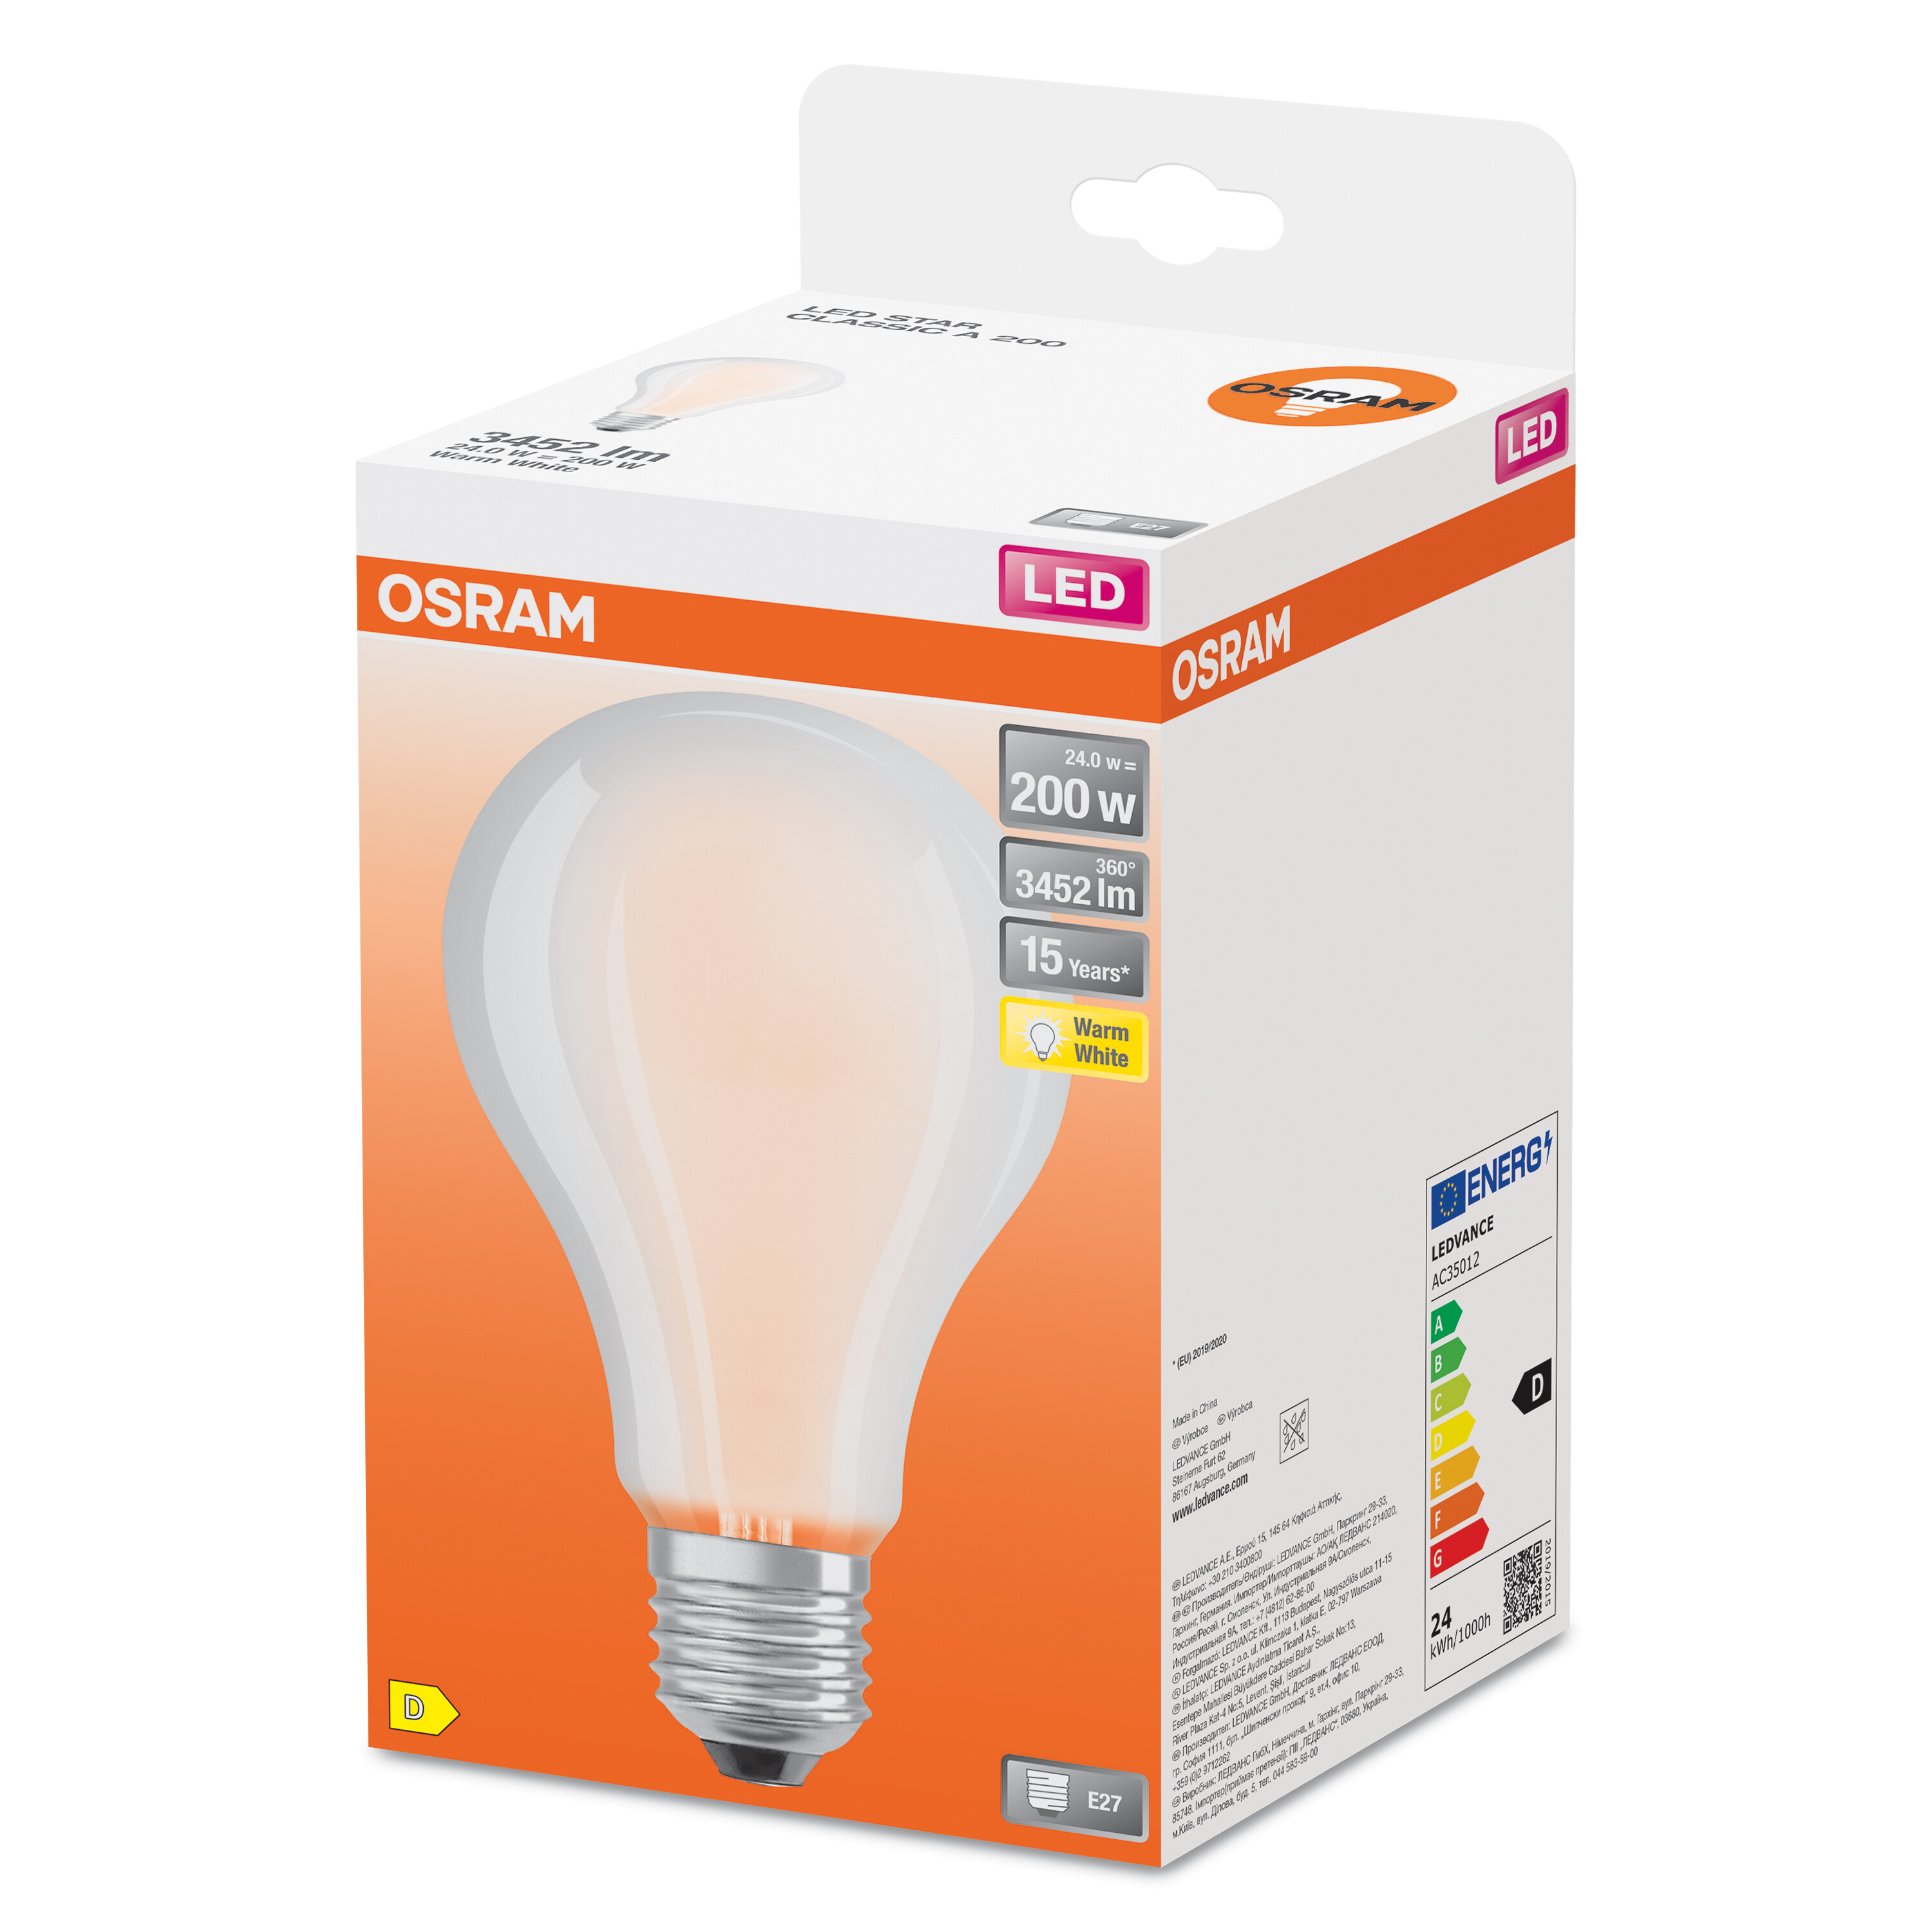 OSRAM  LED A Lampe lumen CLASSIC Warmweiß 3452 LED STAR